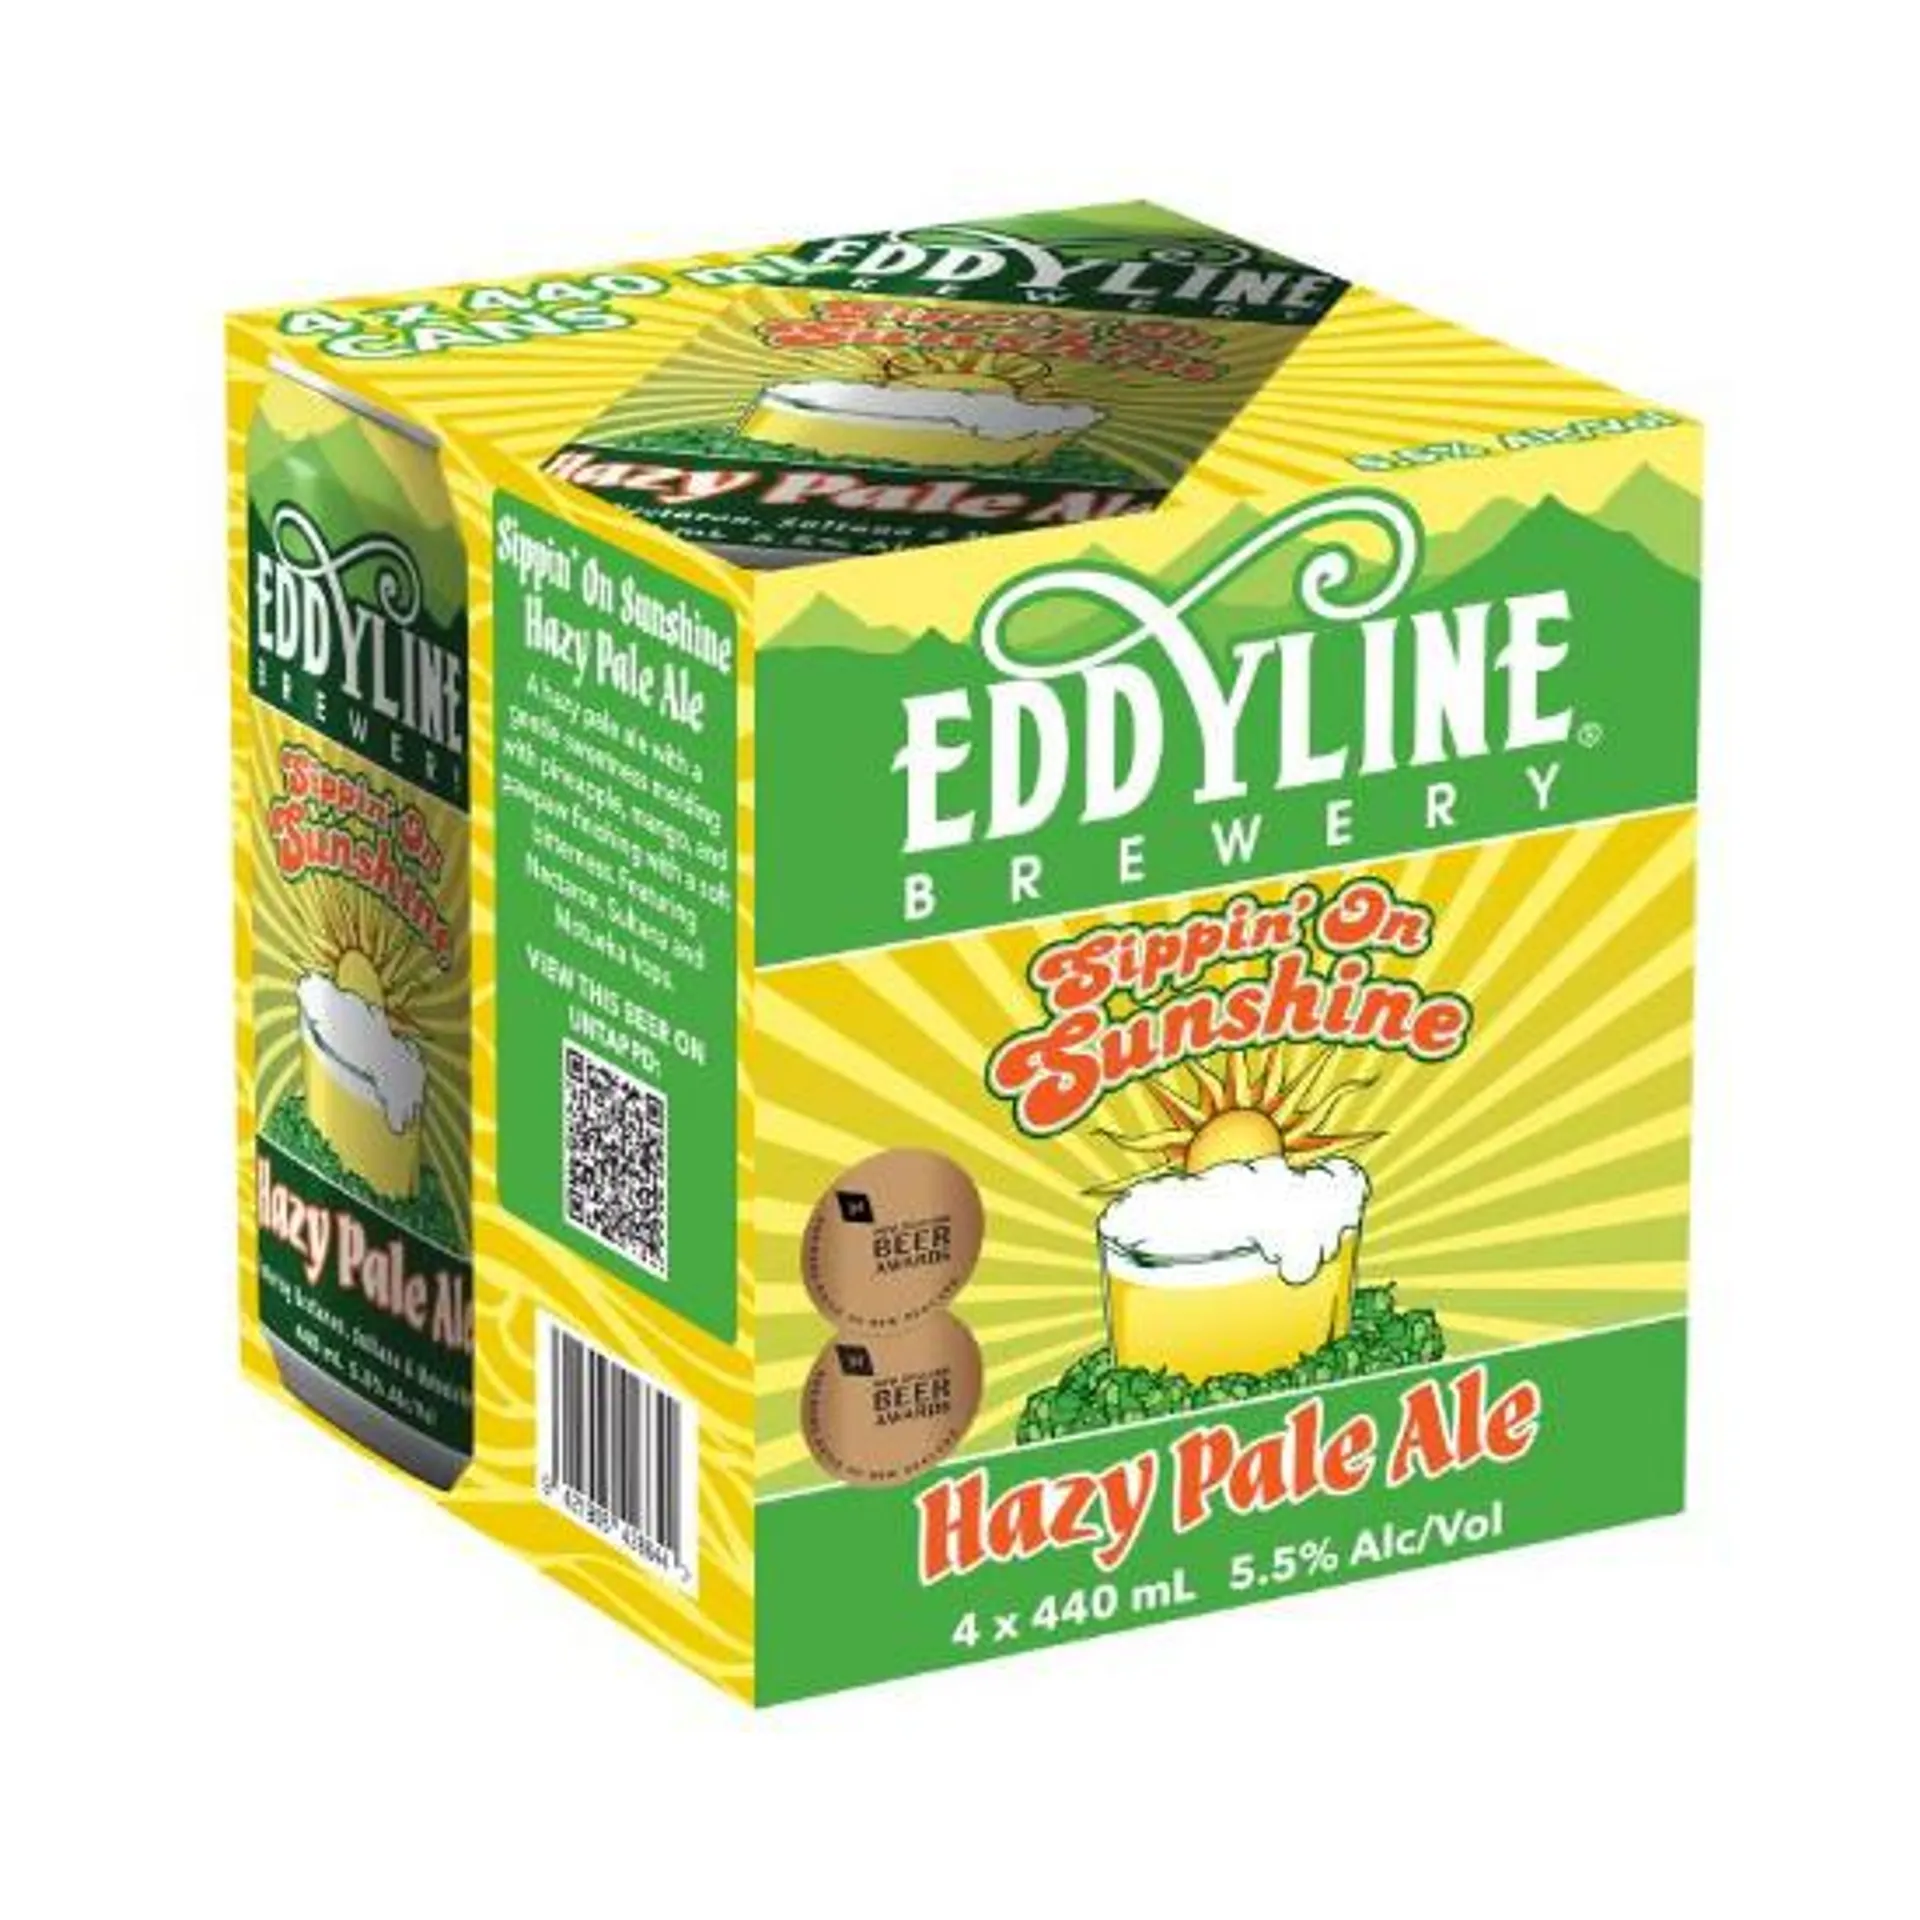 Eddyline Sippin' On Sunshine Hazy Pale Ale Cans 4x440ml